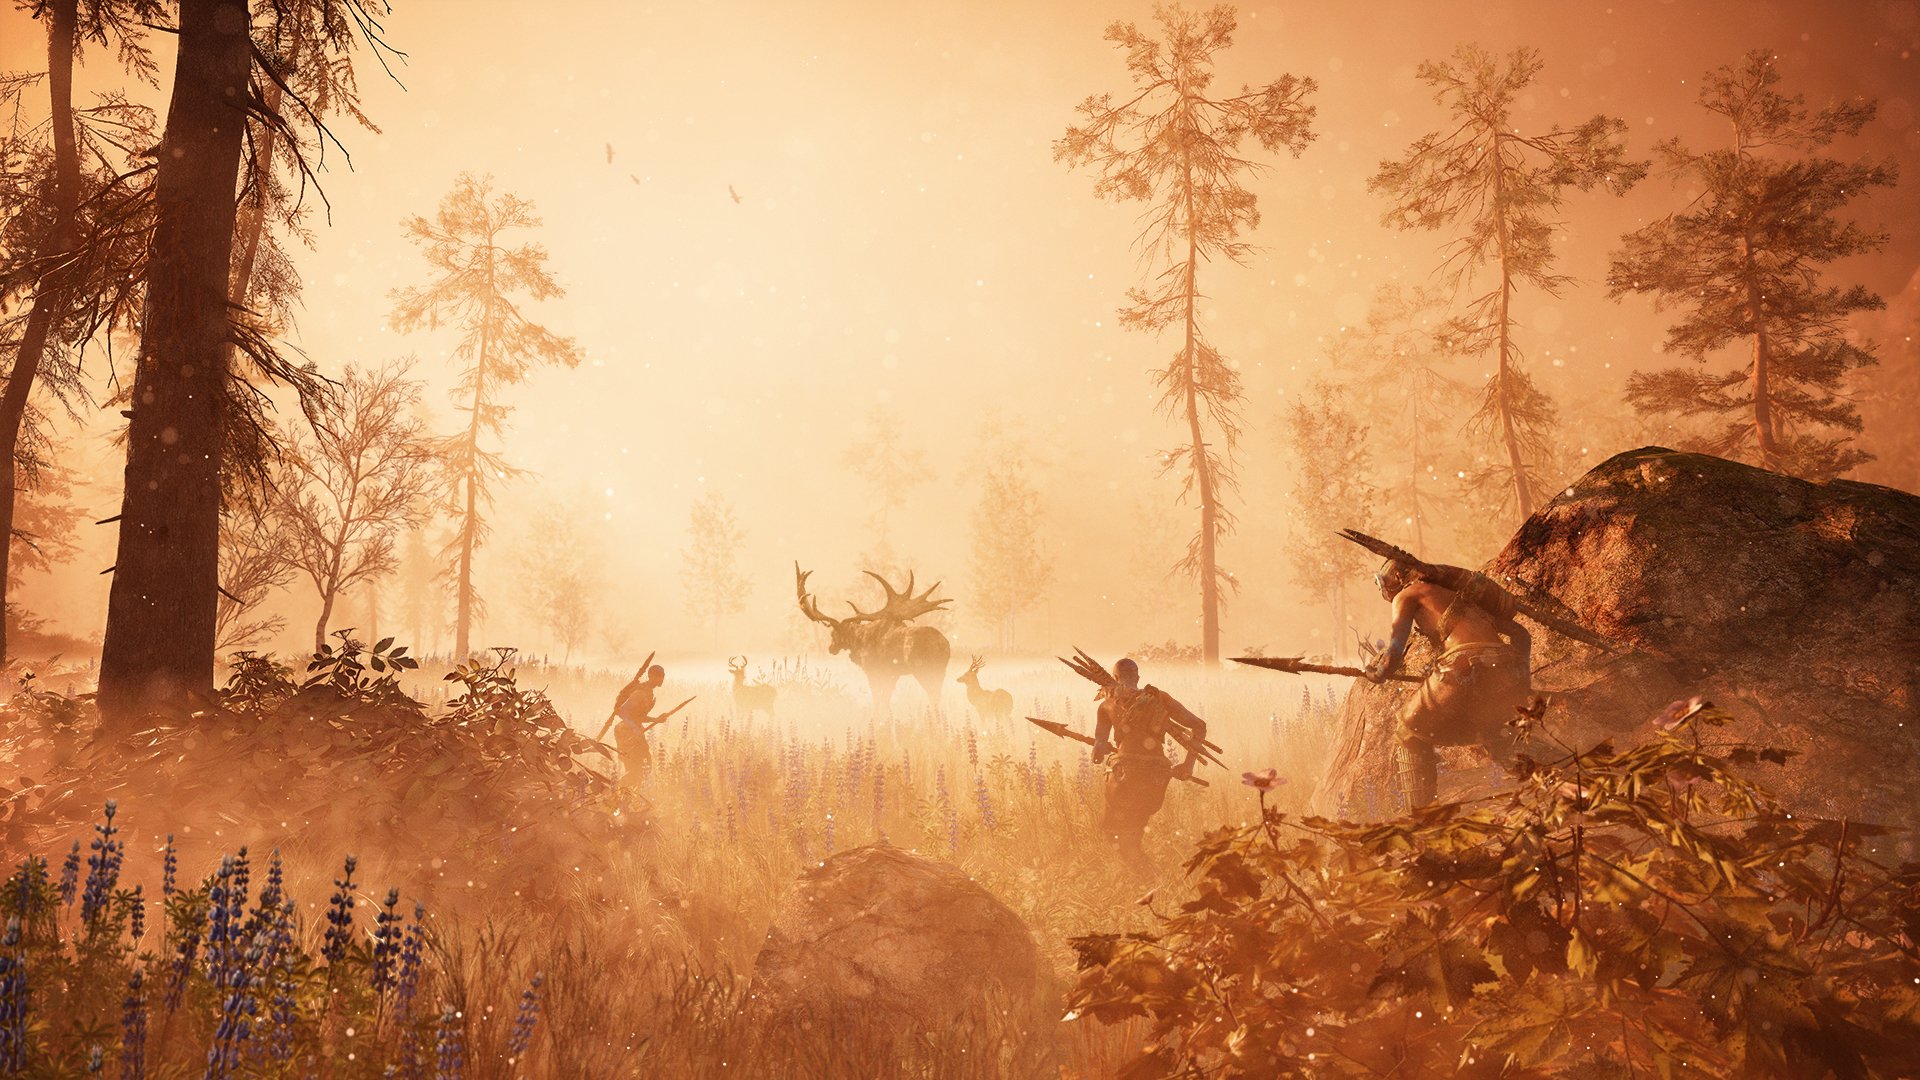 Far Cry Primal Digital Apex Edition | PC Code - Ubisoft Connect